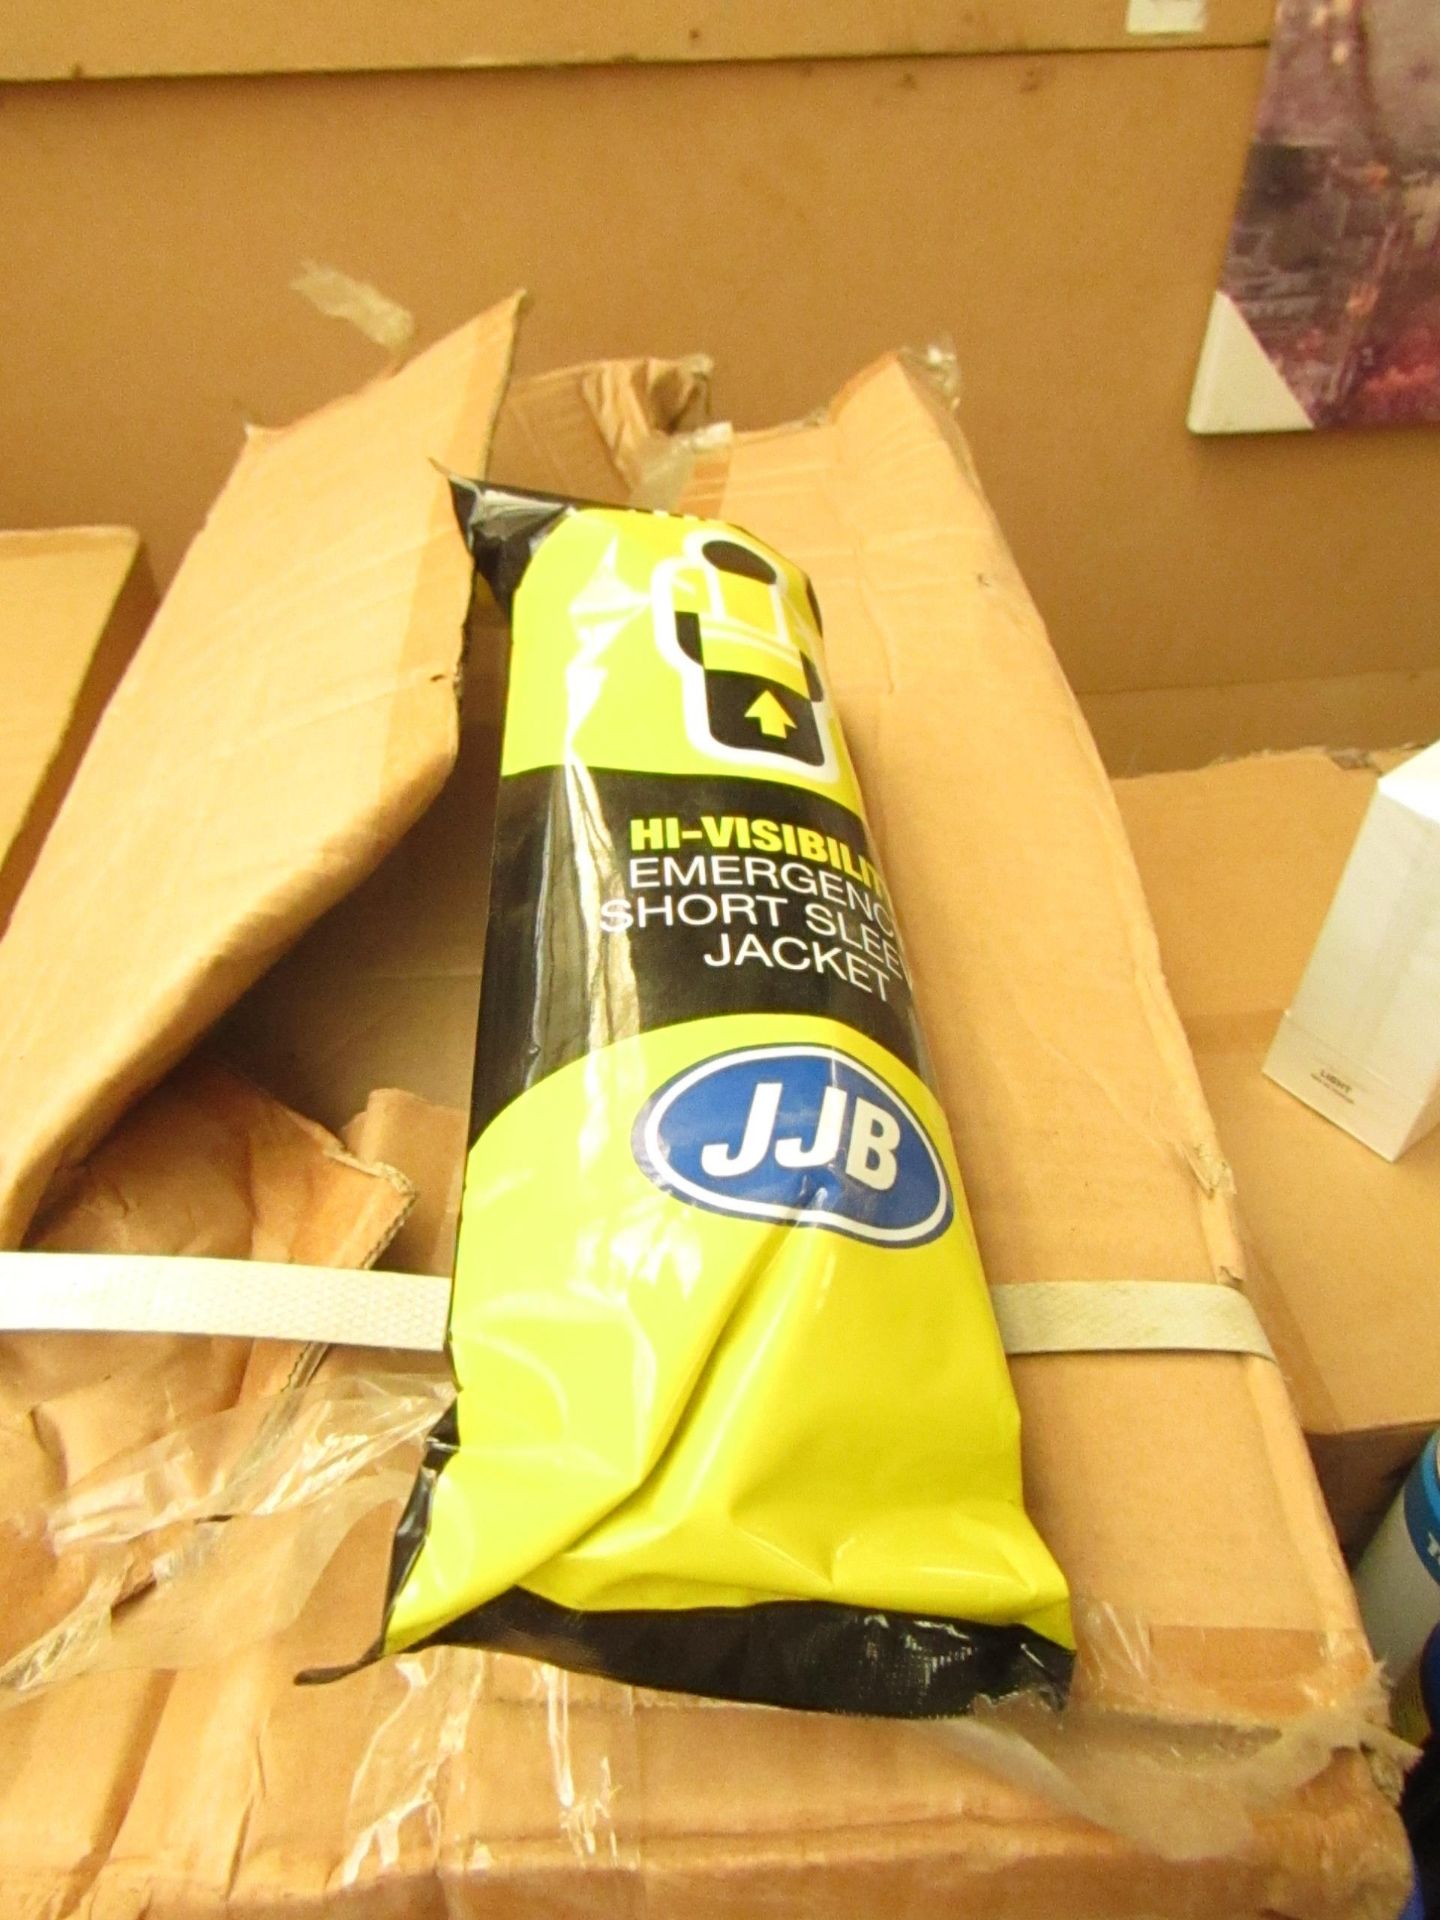 5x JJB hi-visibility emergency shirt sleeve jacket, new and packaged.